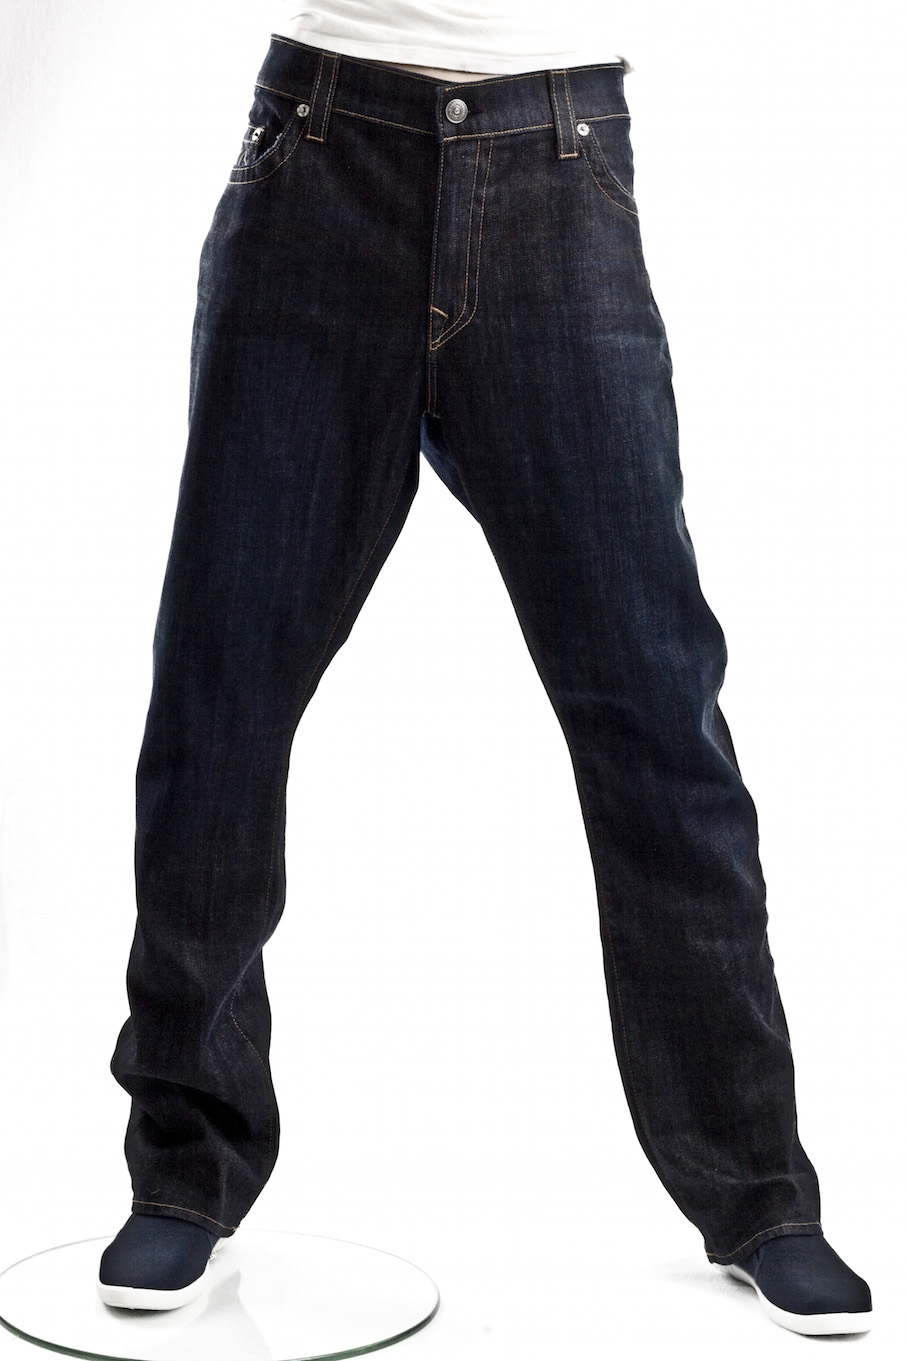 джинсы мужские True Religion широкие прямые Ricky straight leg no flaps jean